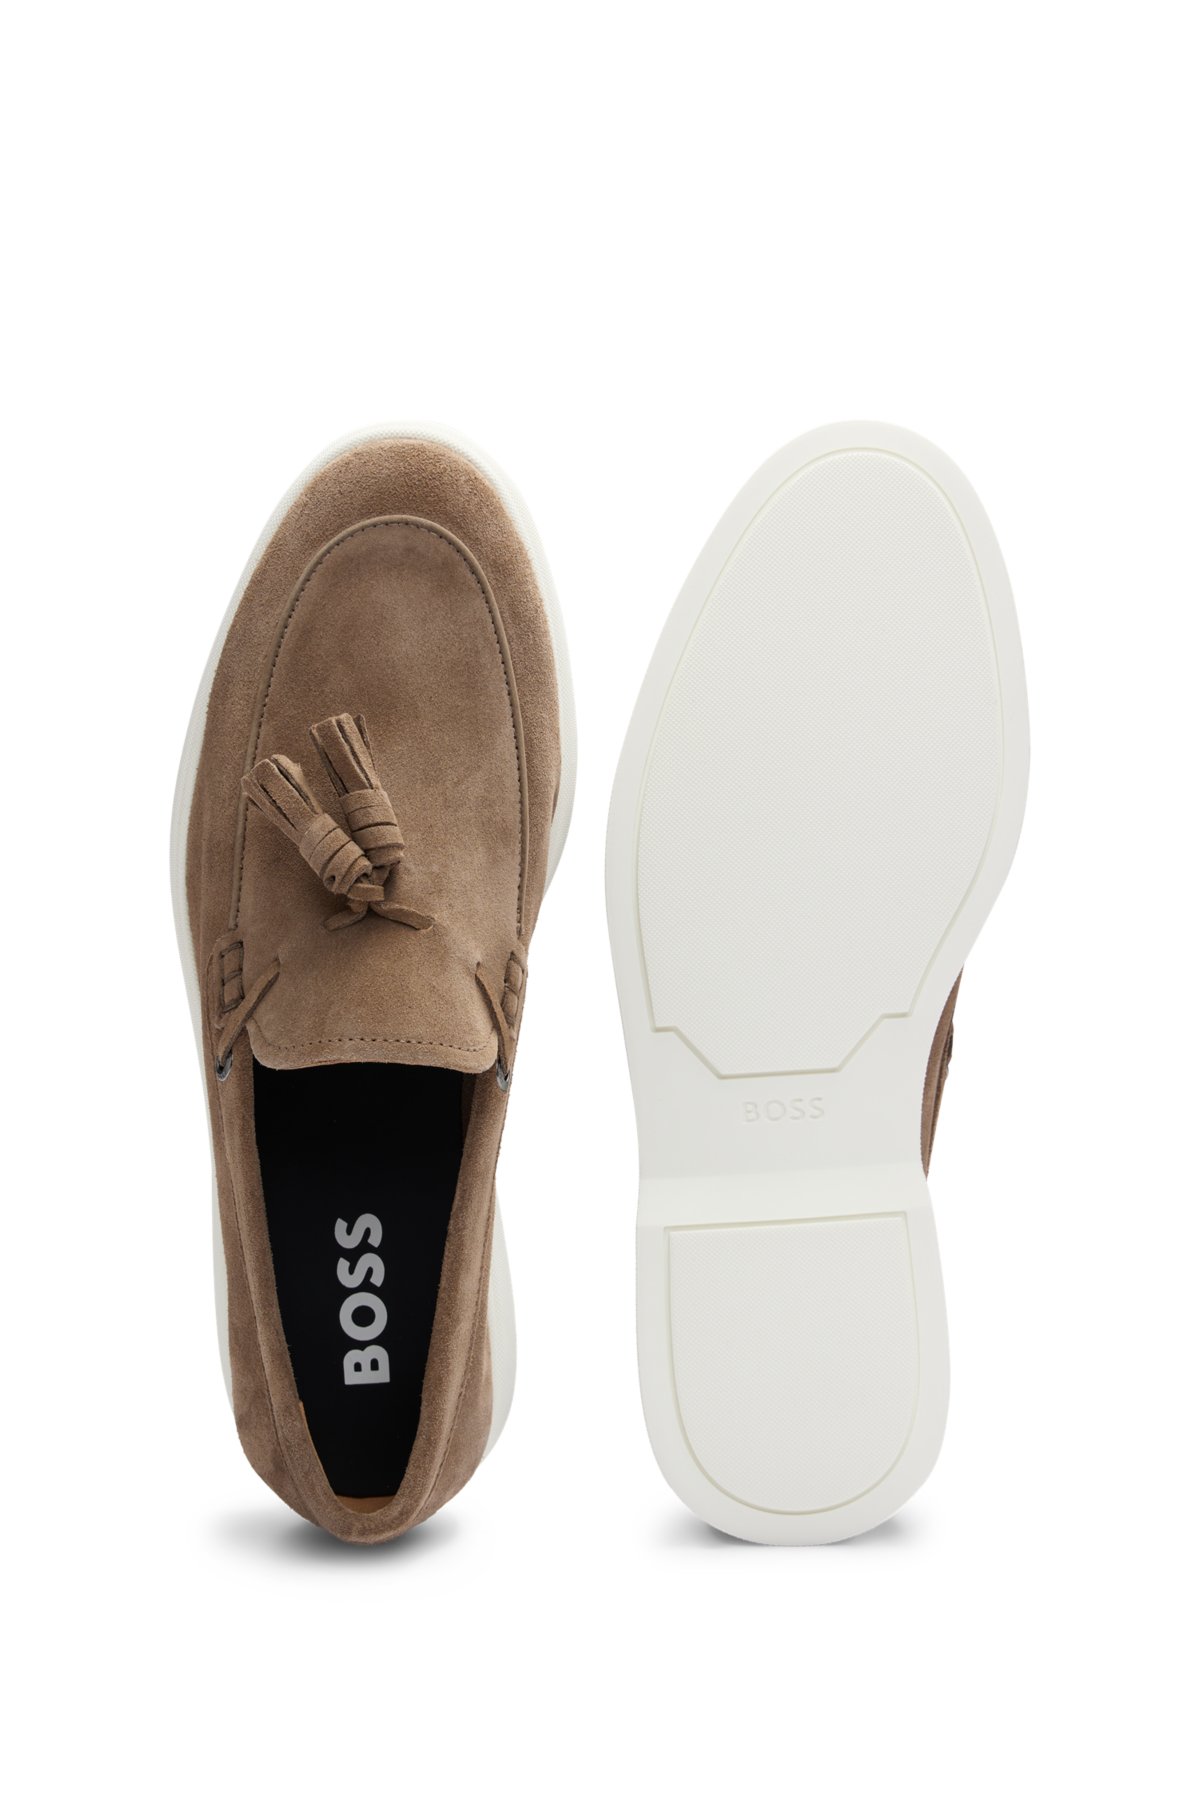 Suede slip-on loafers with tassel trim, Beige